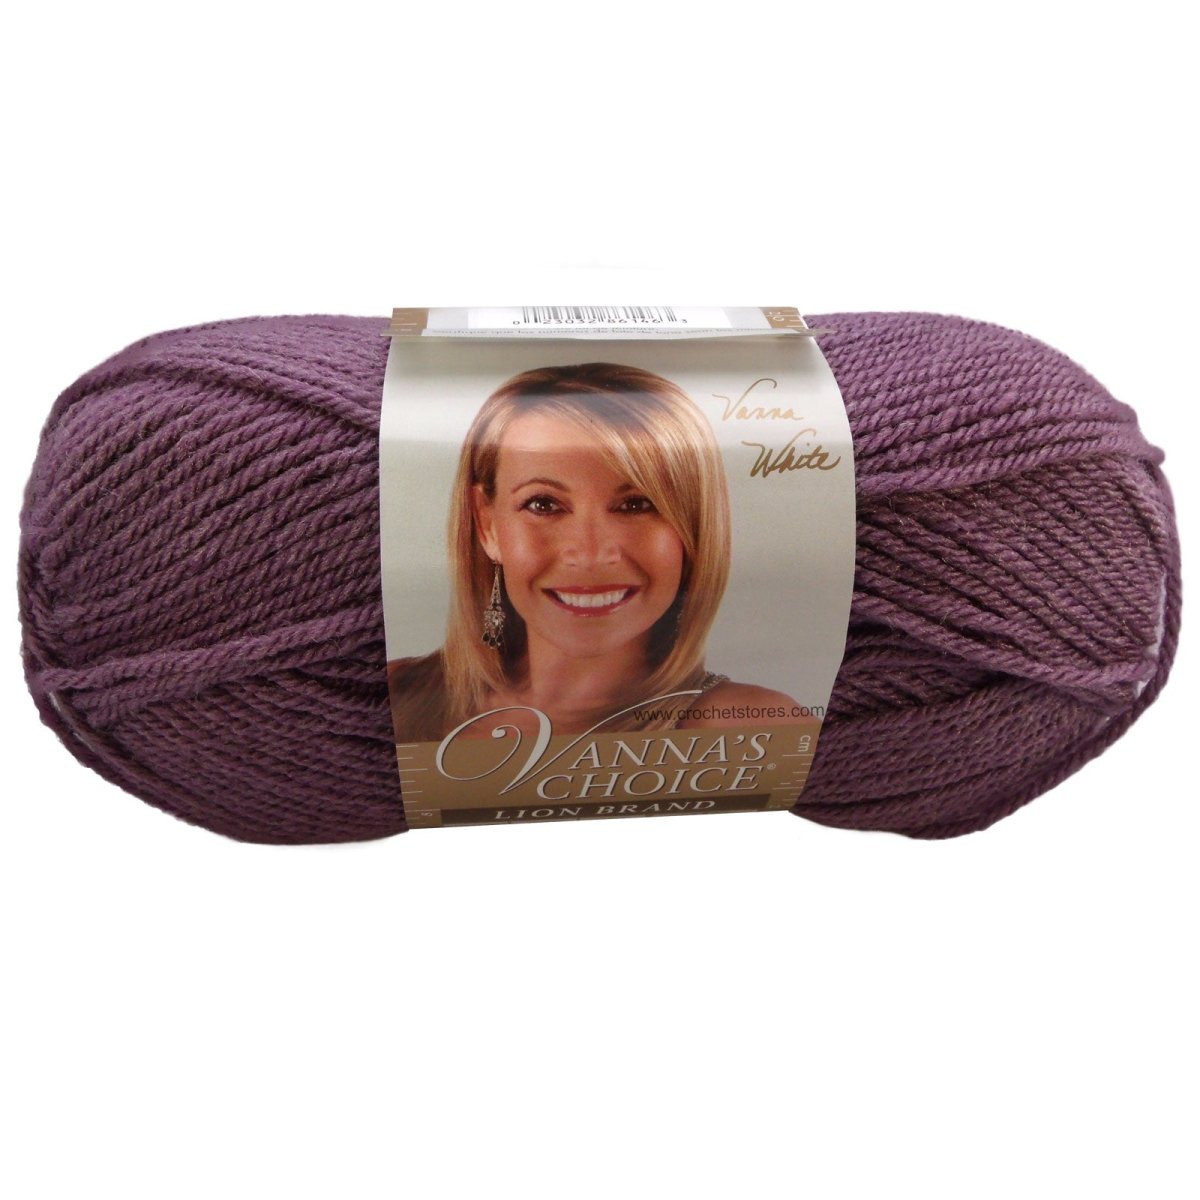 VANNAS CHOICE - Crochetstores860-146